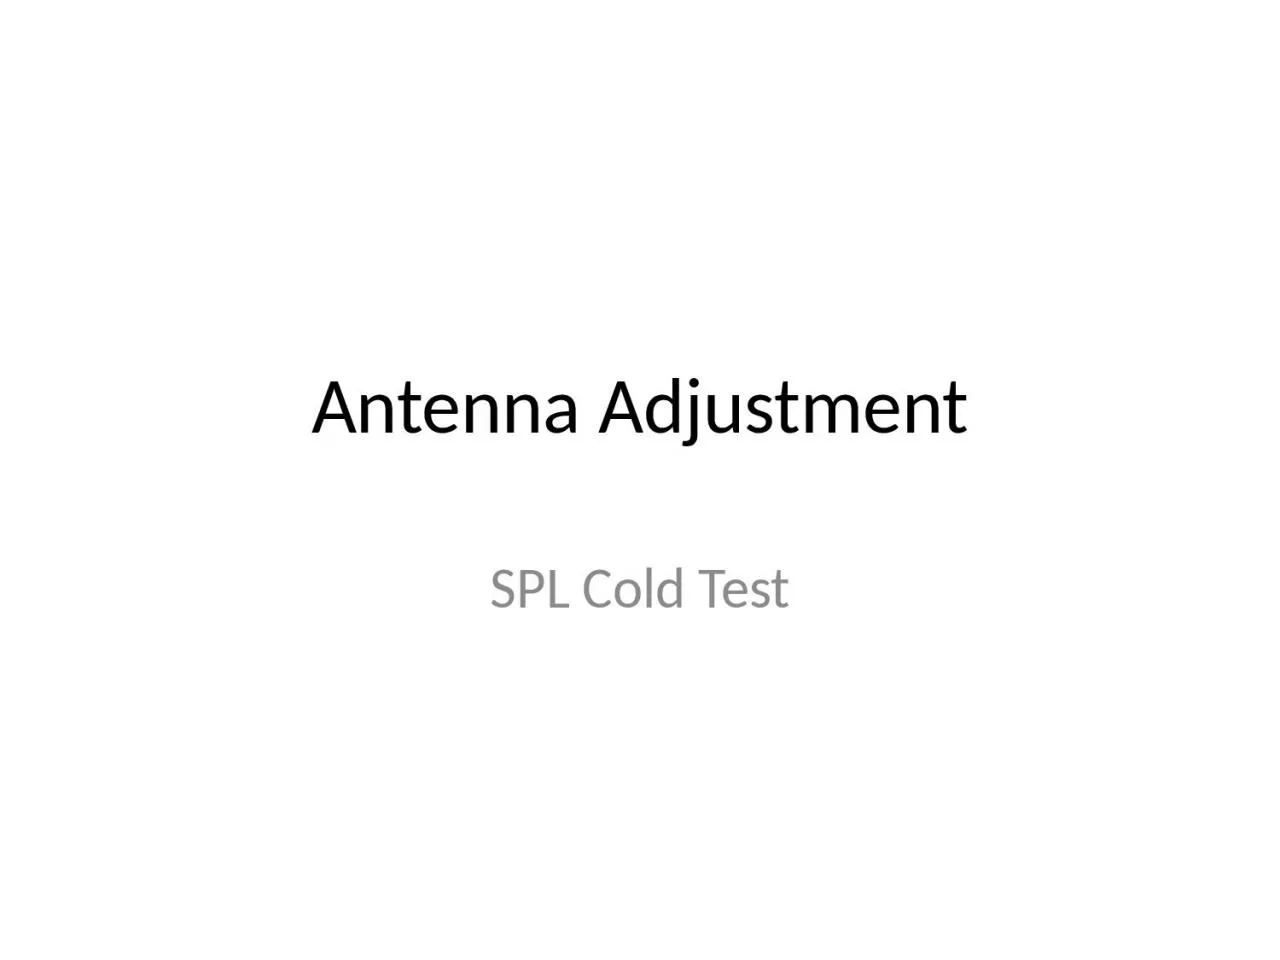 Antenna Adjustment SPL Cold Test